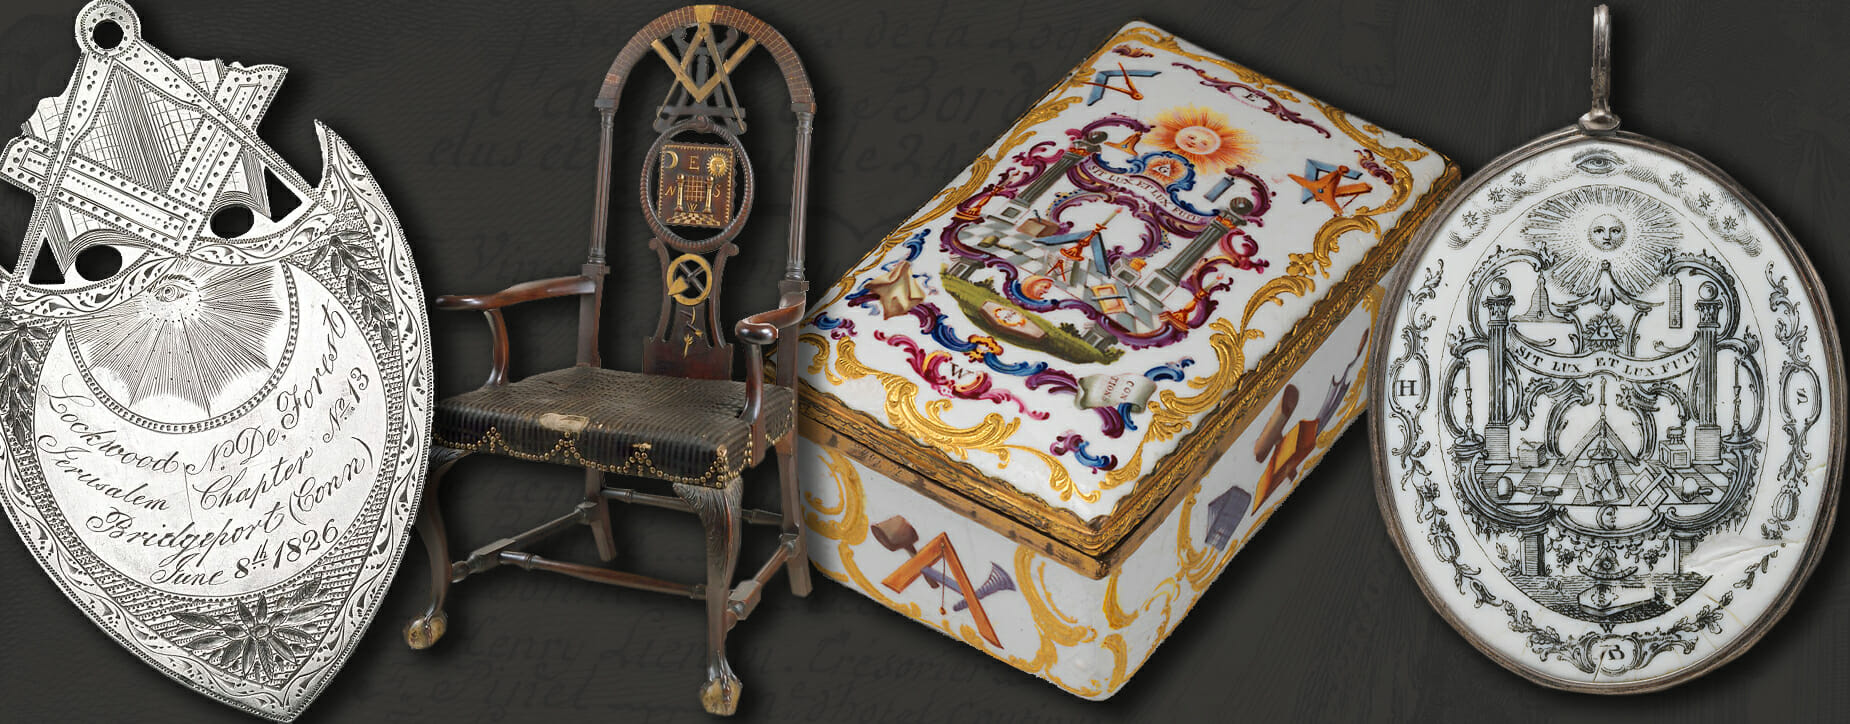 Freemason items furniture art